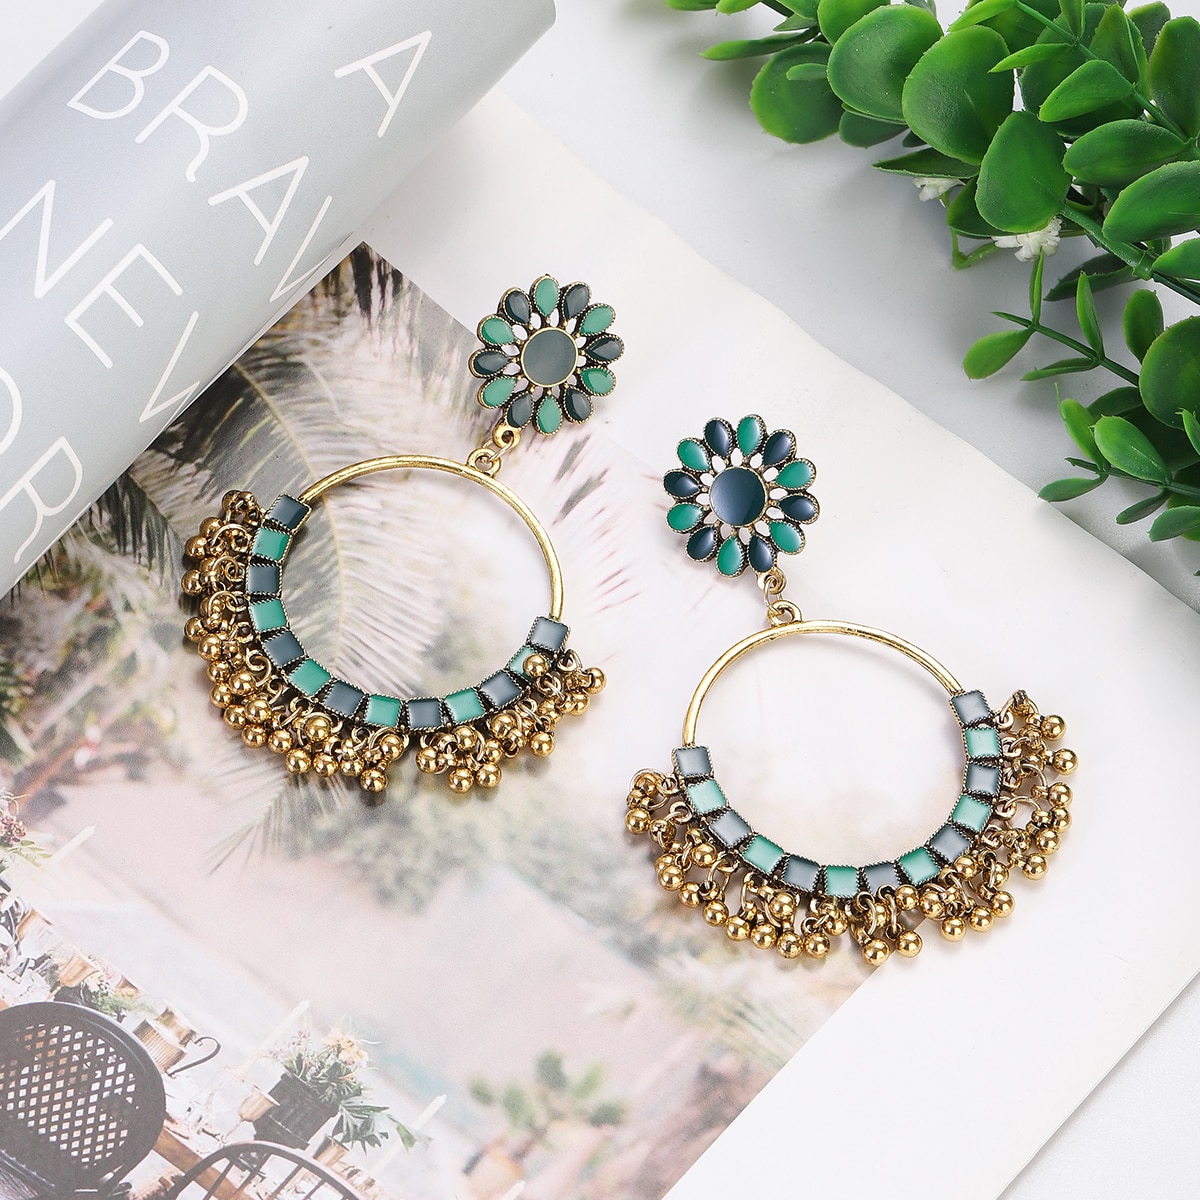 Ethnic-Vintage-Big-Round-Dangle-Earrings-for-Women-Boho-Green-Flower-Beads-Tassel-Earrings-Party-Jew-1005005057264367-10